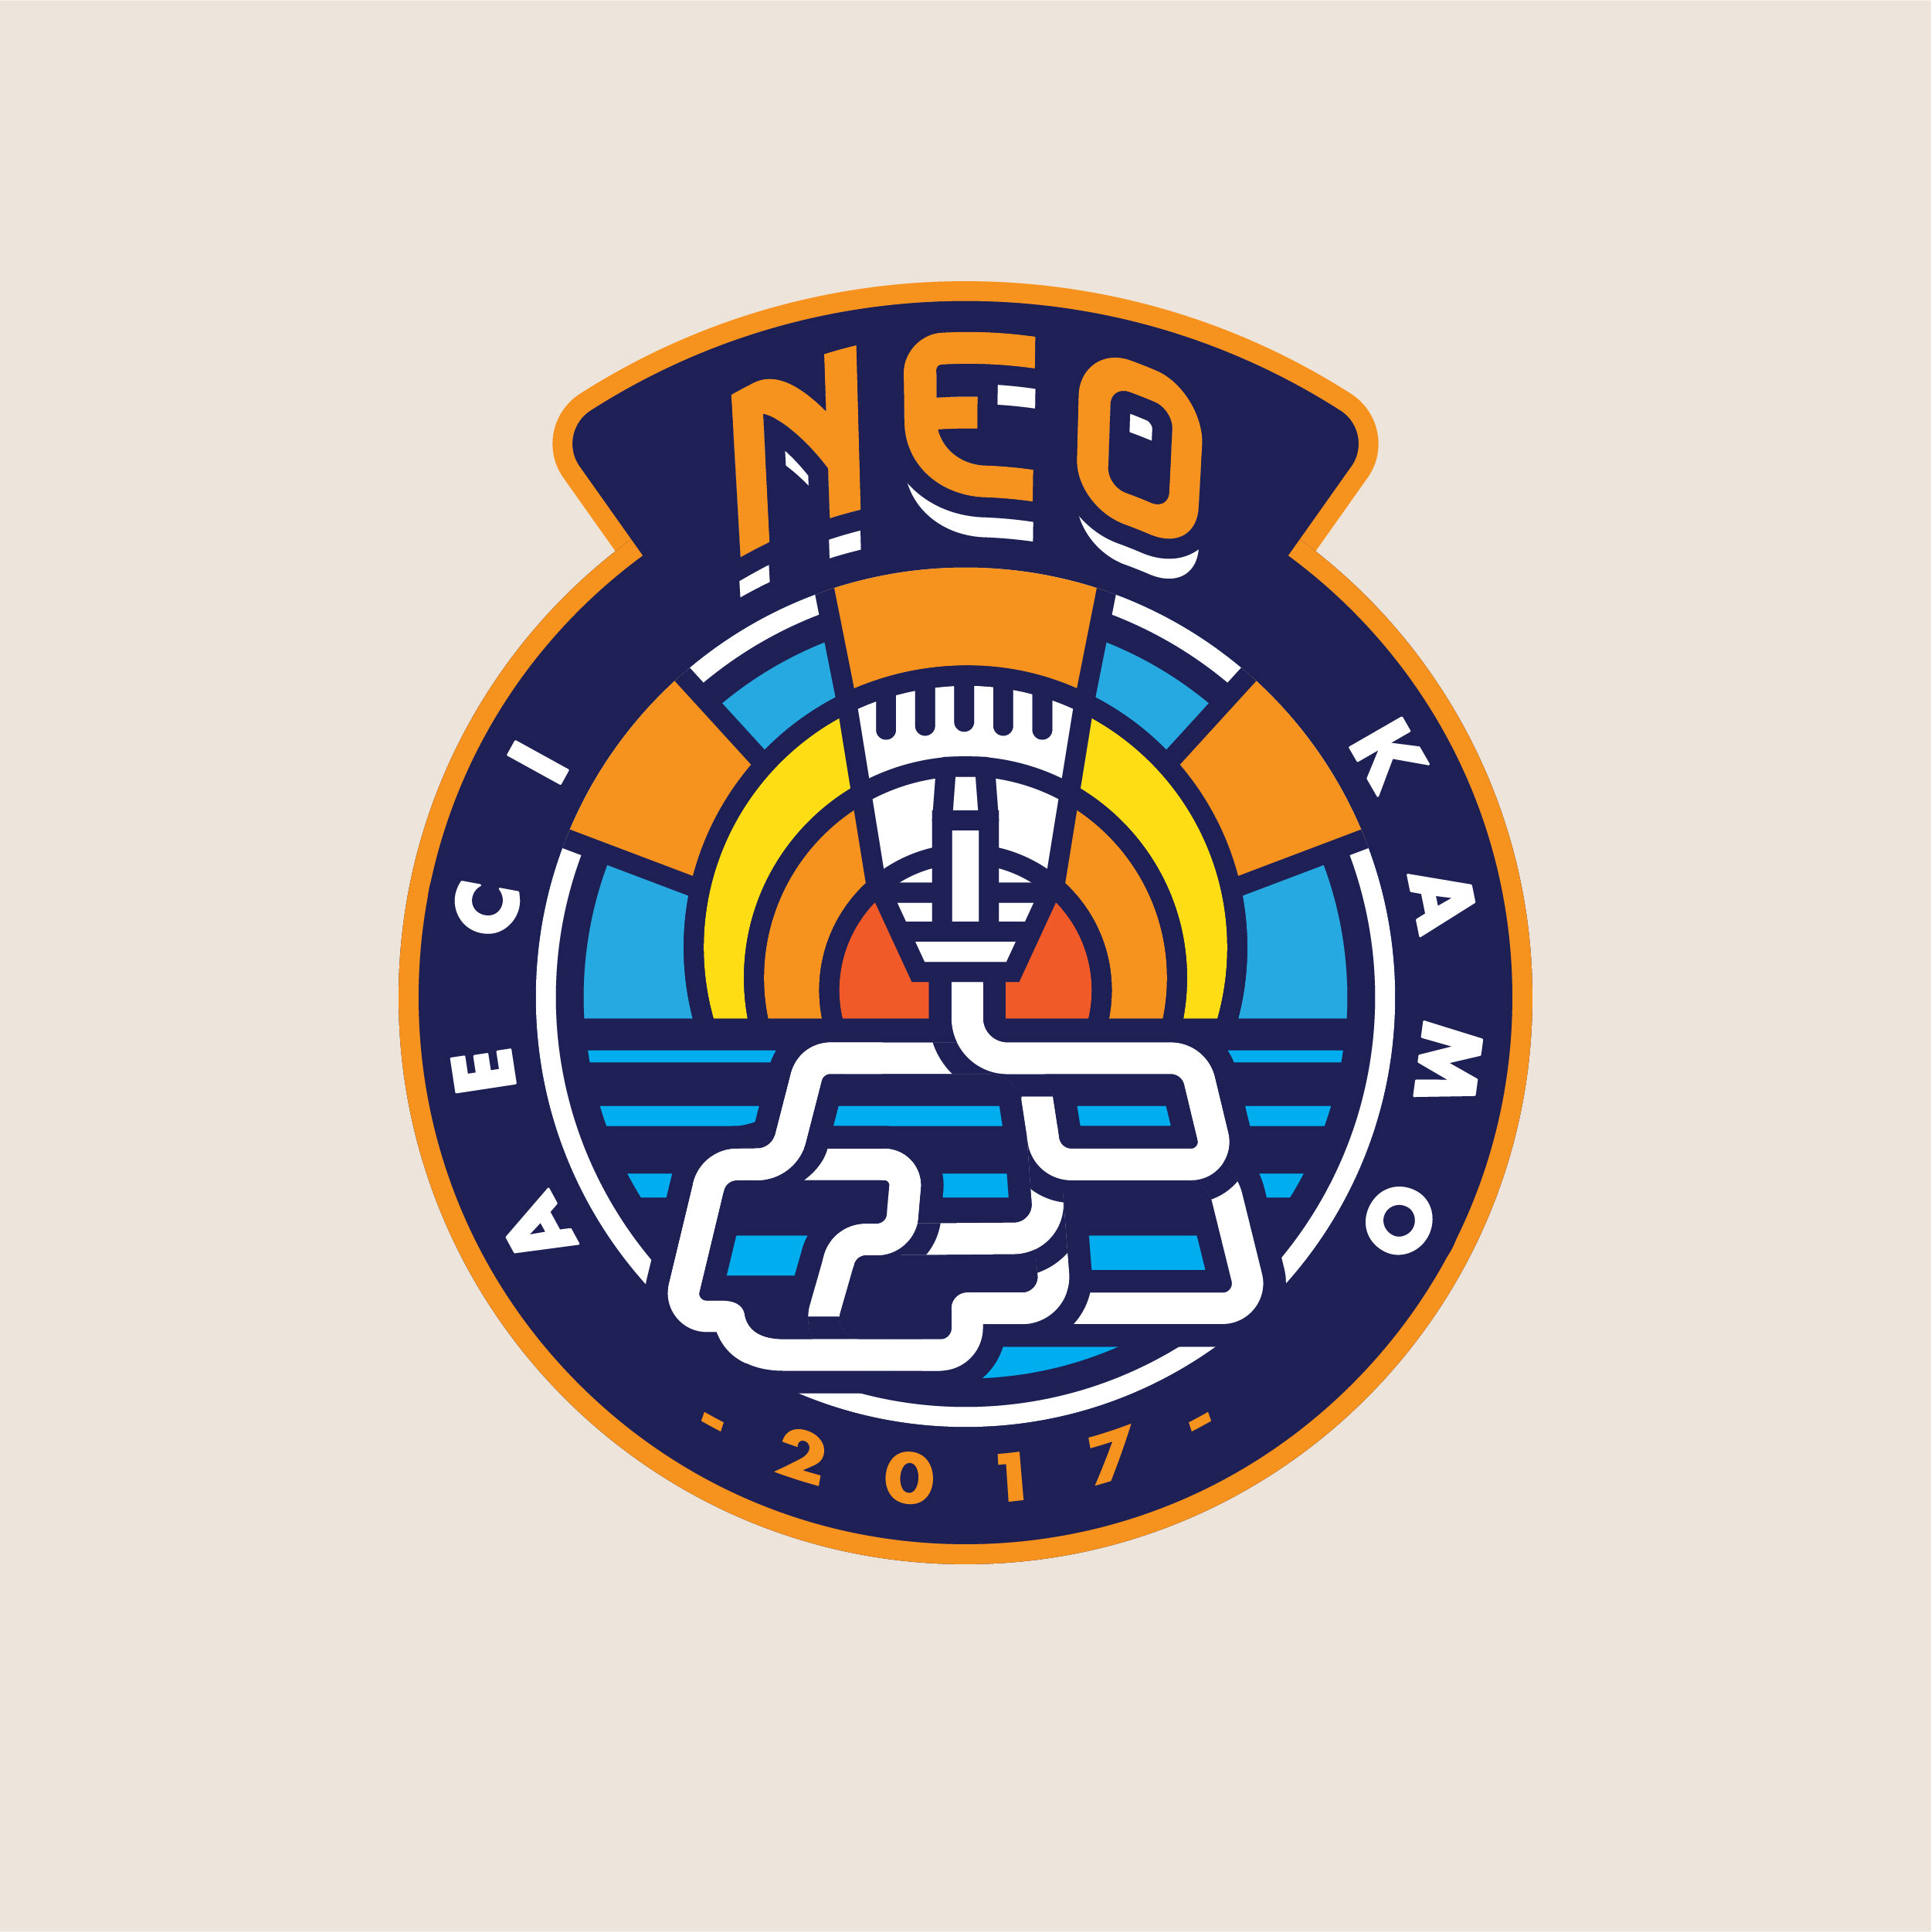 AECI-Project-Badges-Branding_NEO.jpg